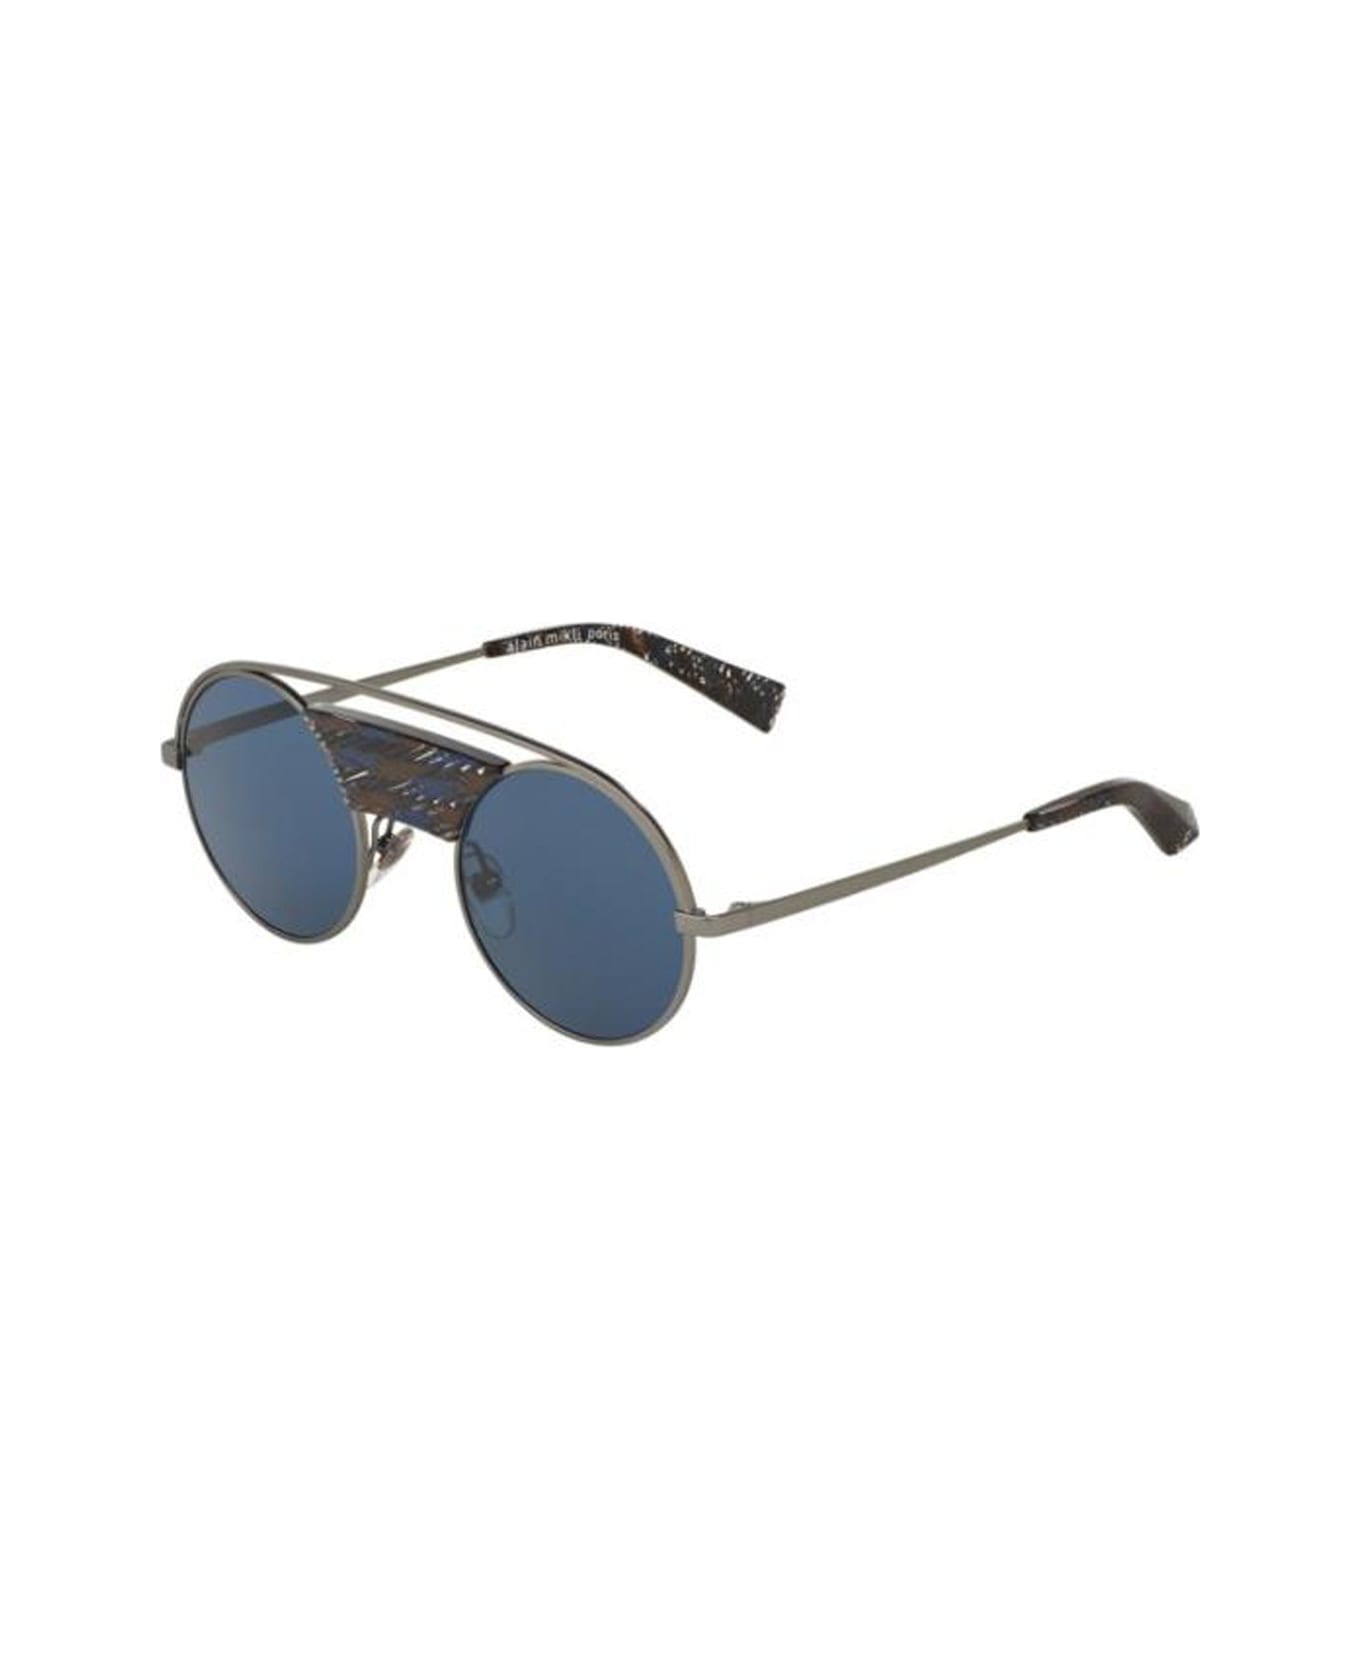 Alain Mikli 0a04002 Sunglasses - Blu